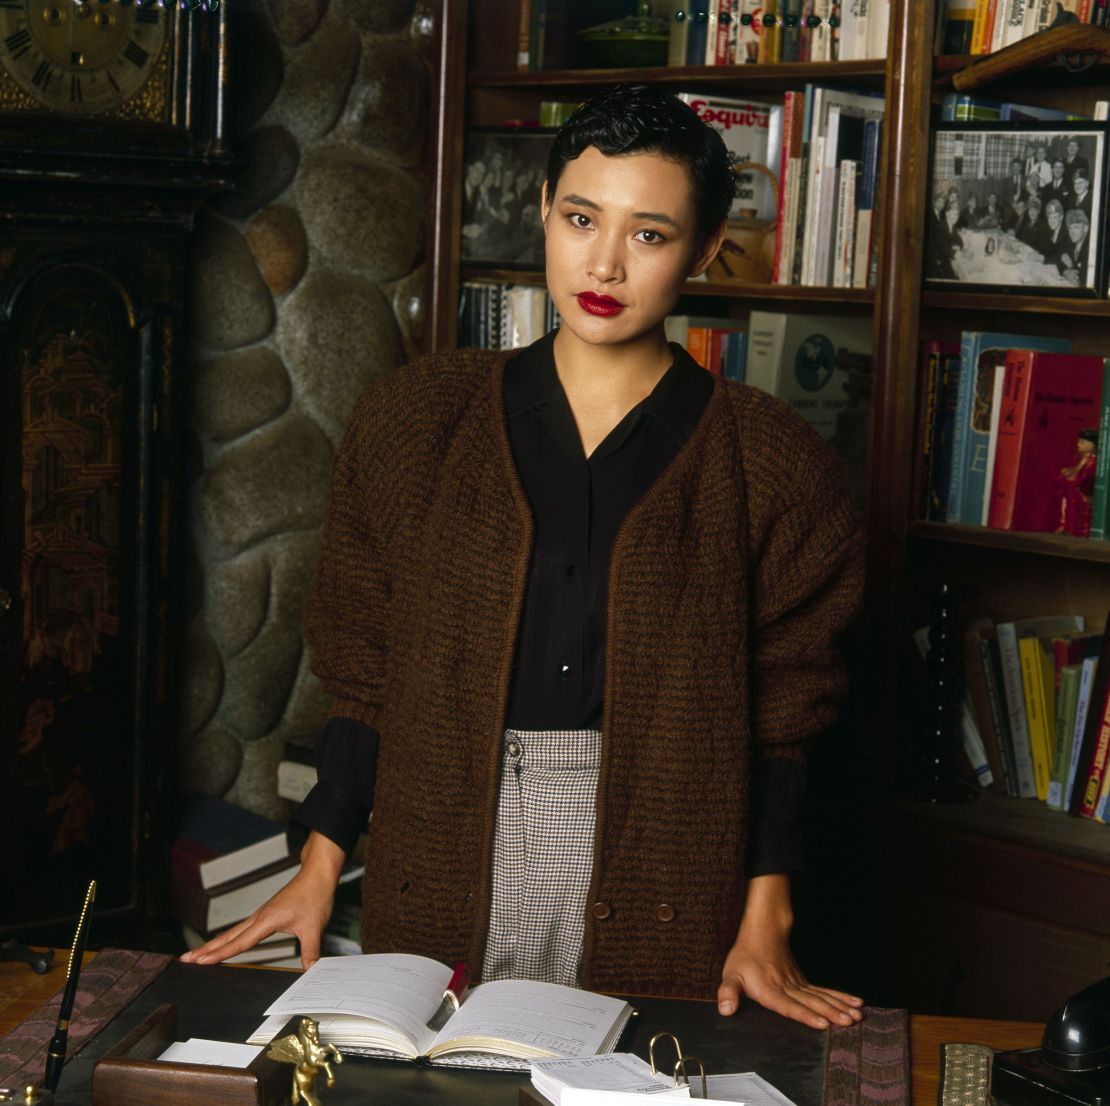 Joan Chen as Josie Packard, widow and heiress to the sawmill in Twin Peaks